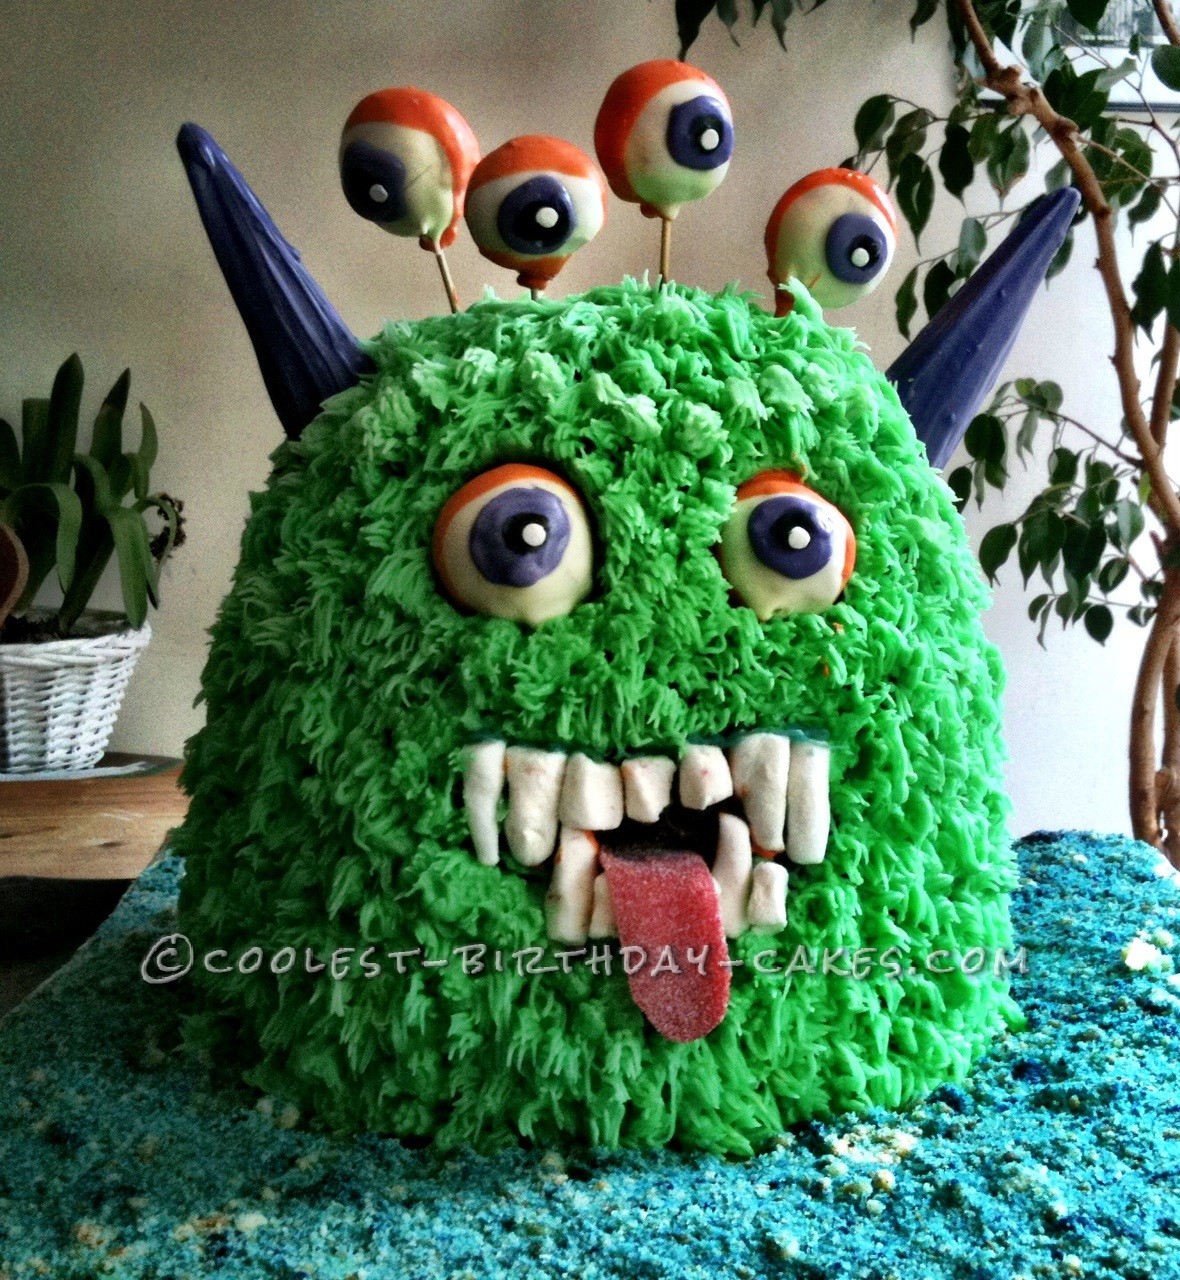 Cool Googly Eyed Monster Cake